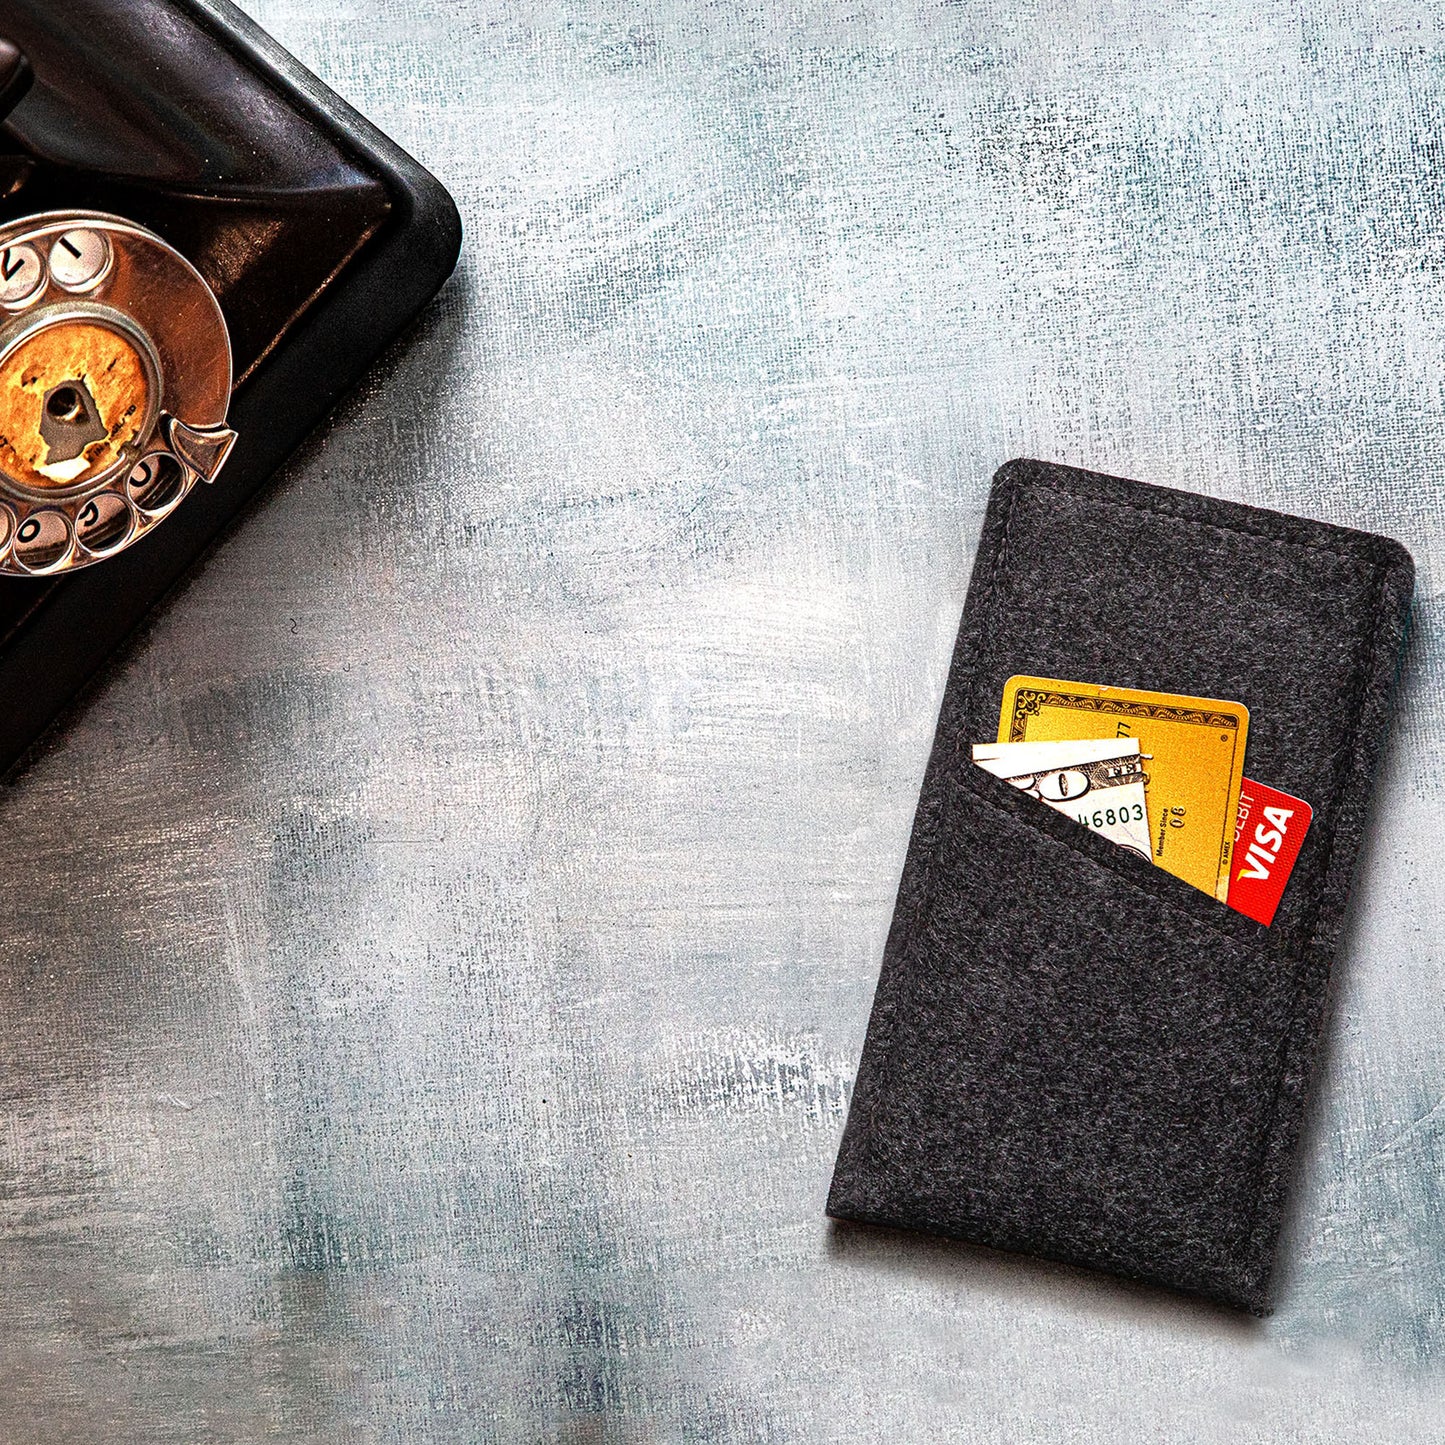 Premium Felt iPhone Sleeve with Card Pocket - Charcoal Gray & Black